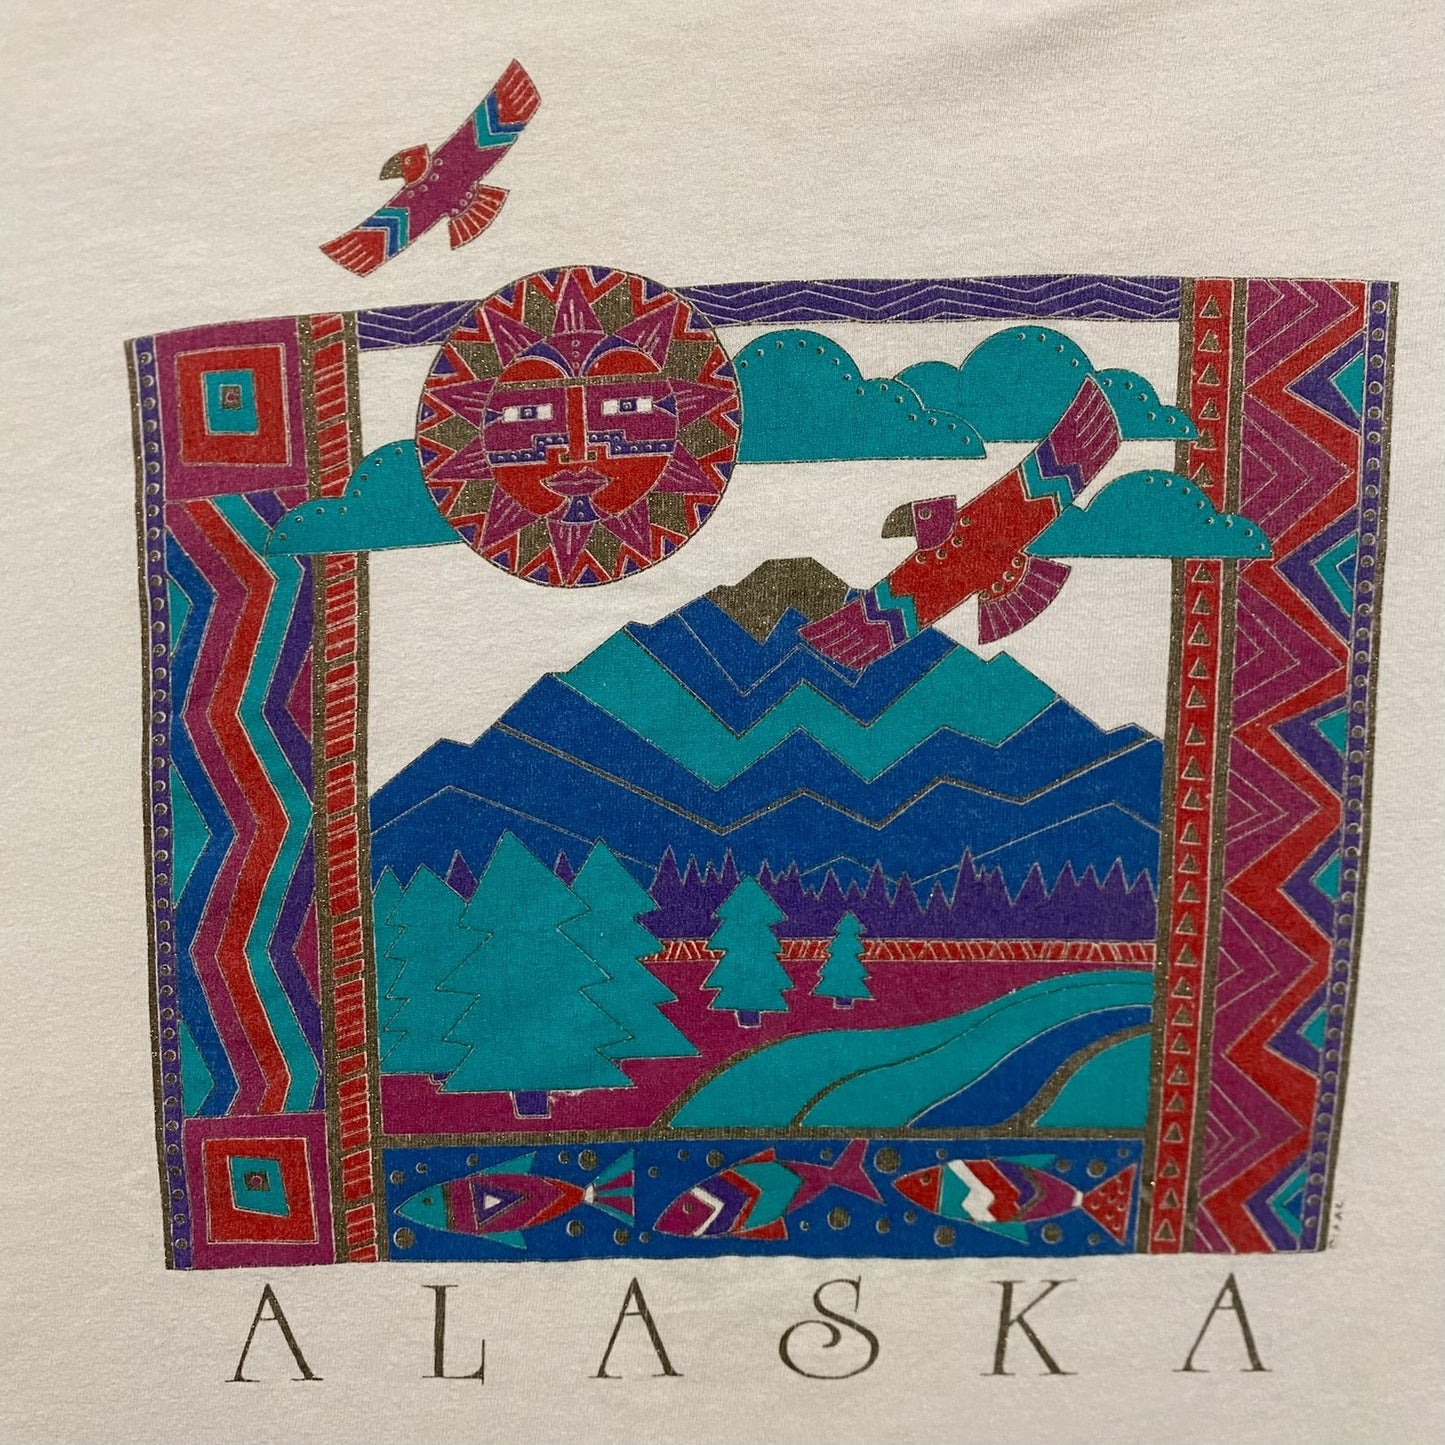 Vintage 90s Alaska Tribal Nature Art Single Stitch T-Shirt